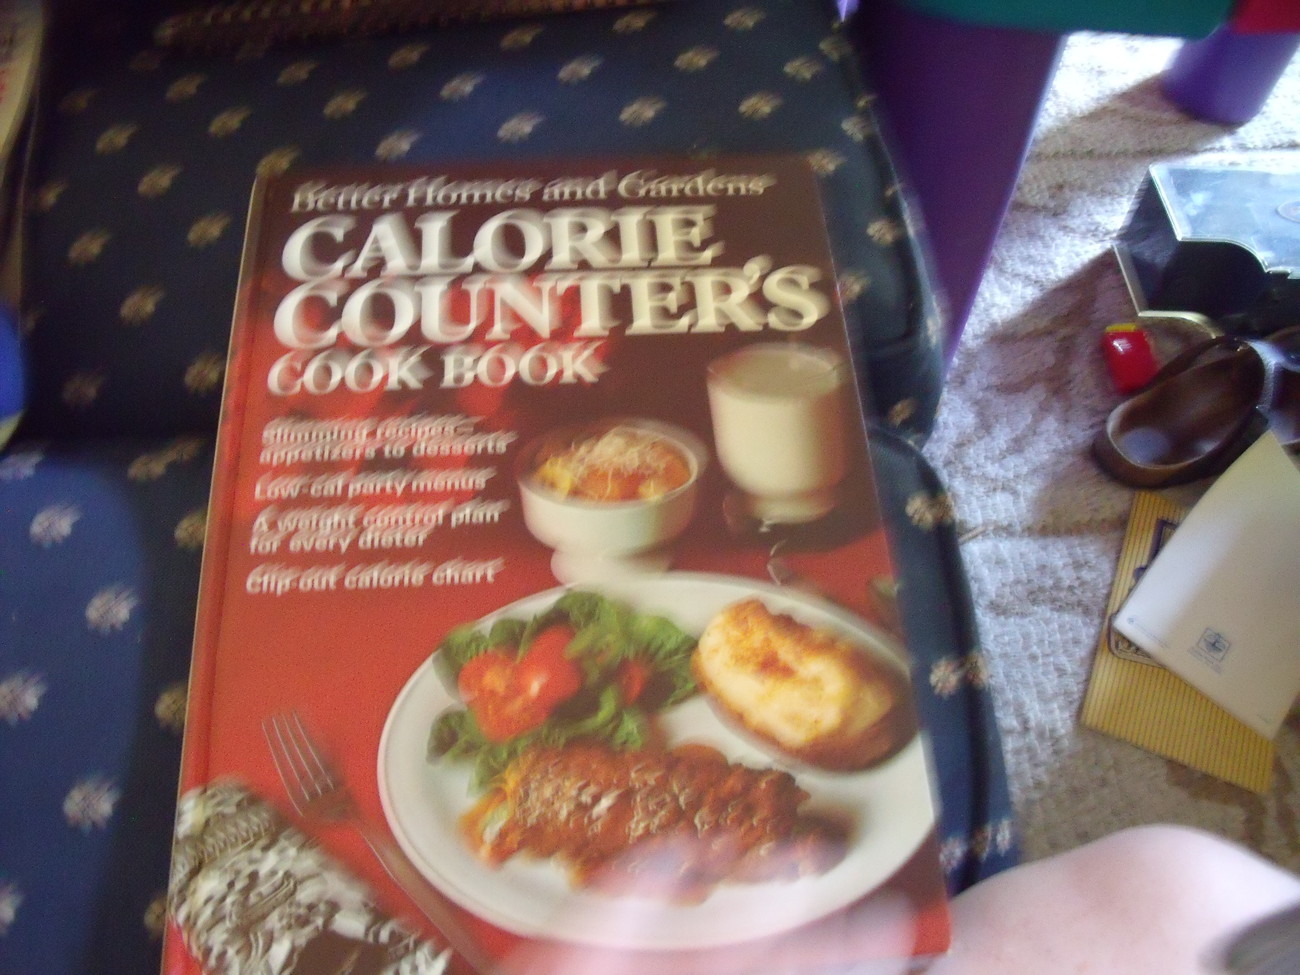 Better Homes & Gardens "Calorie Counters Cookbook" circa 1970 - $12.00